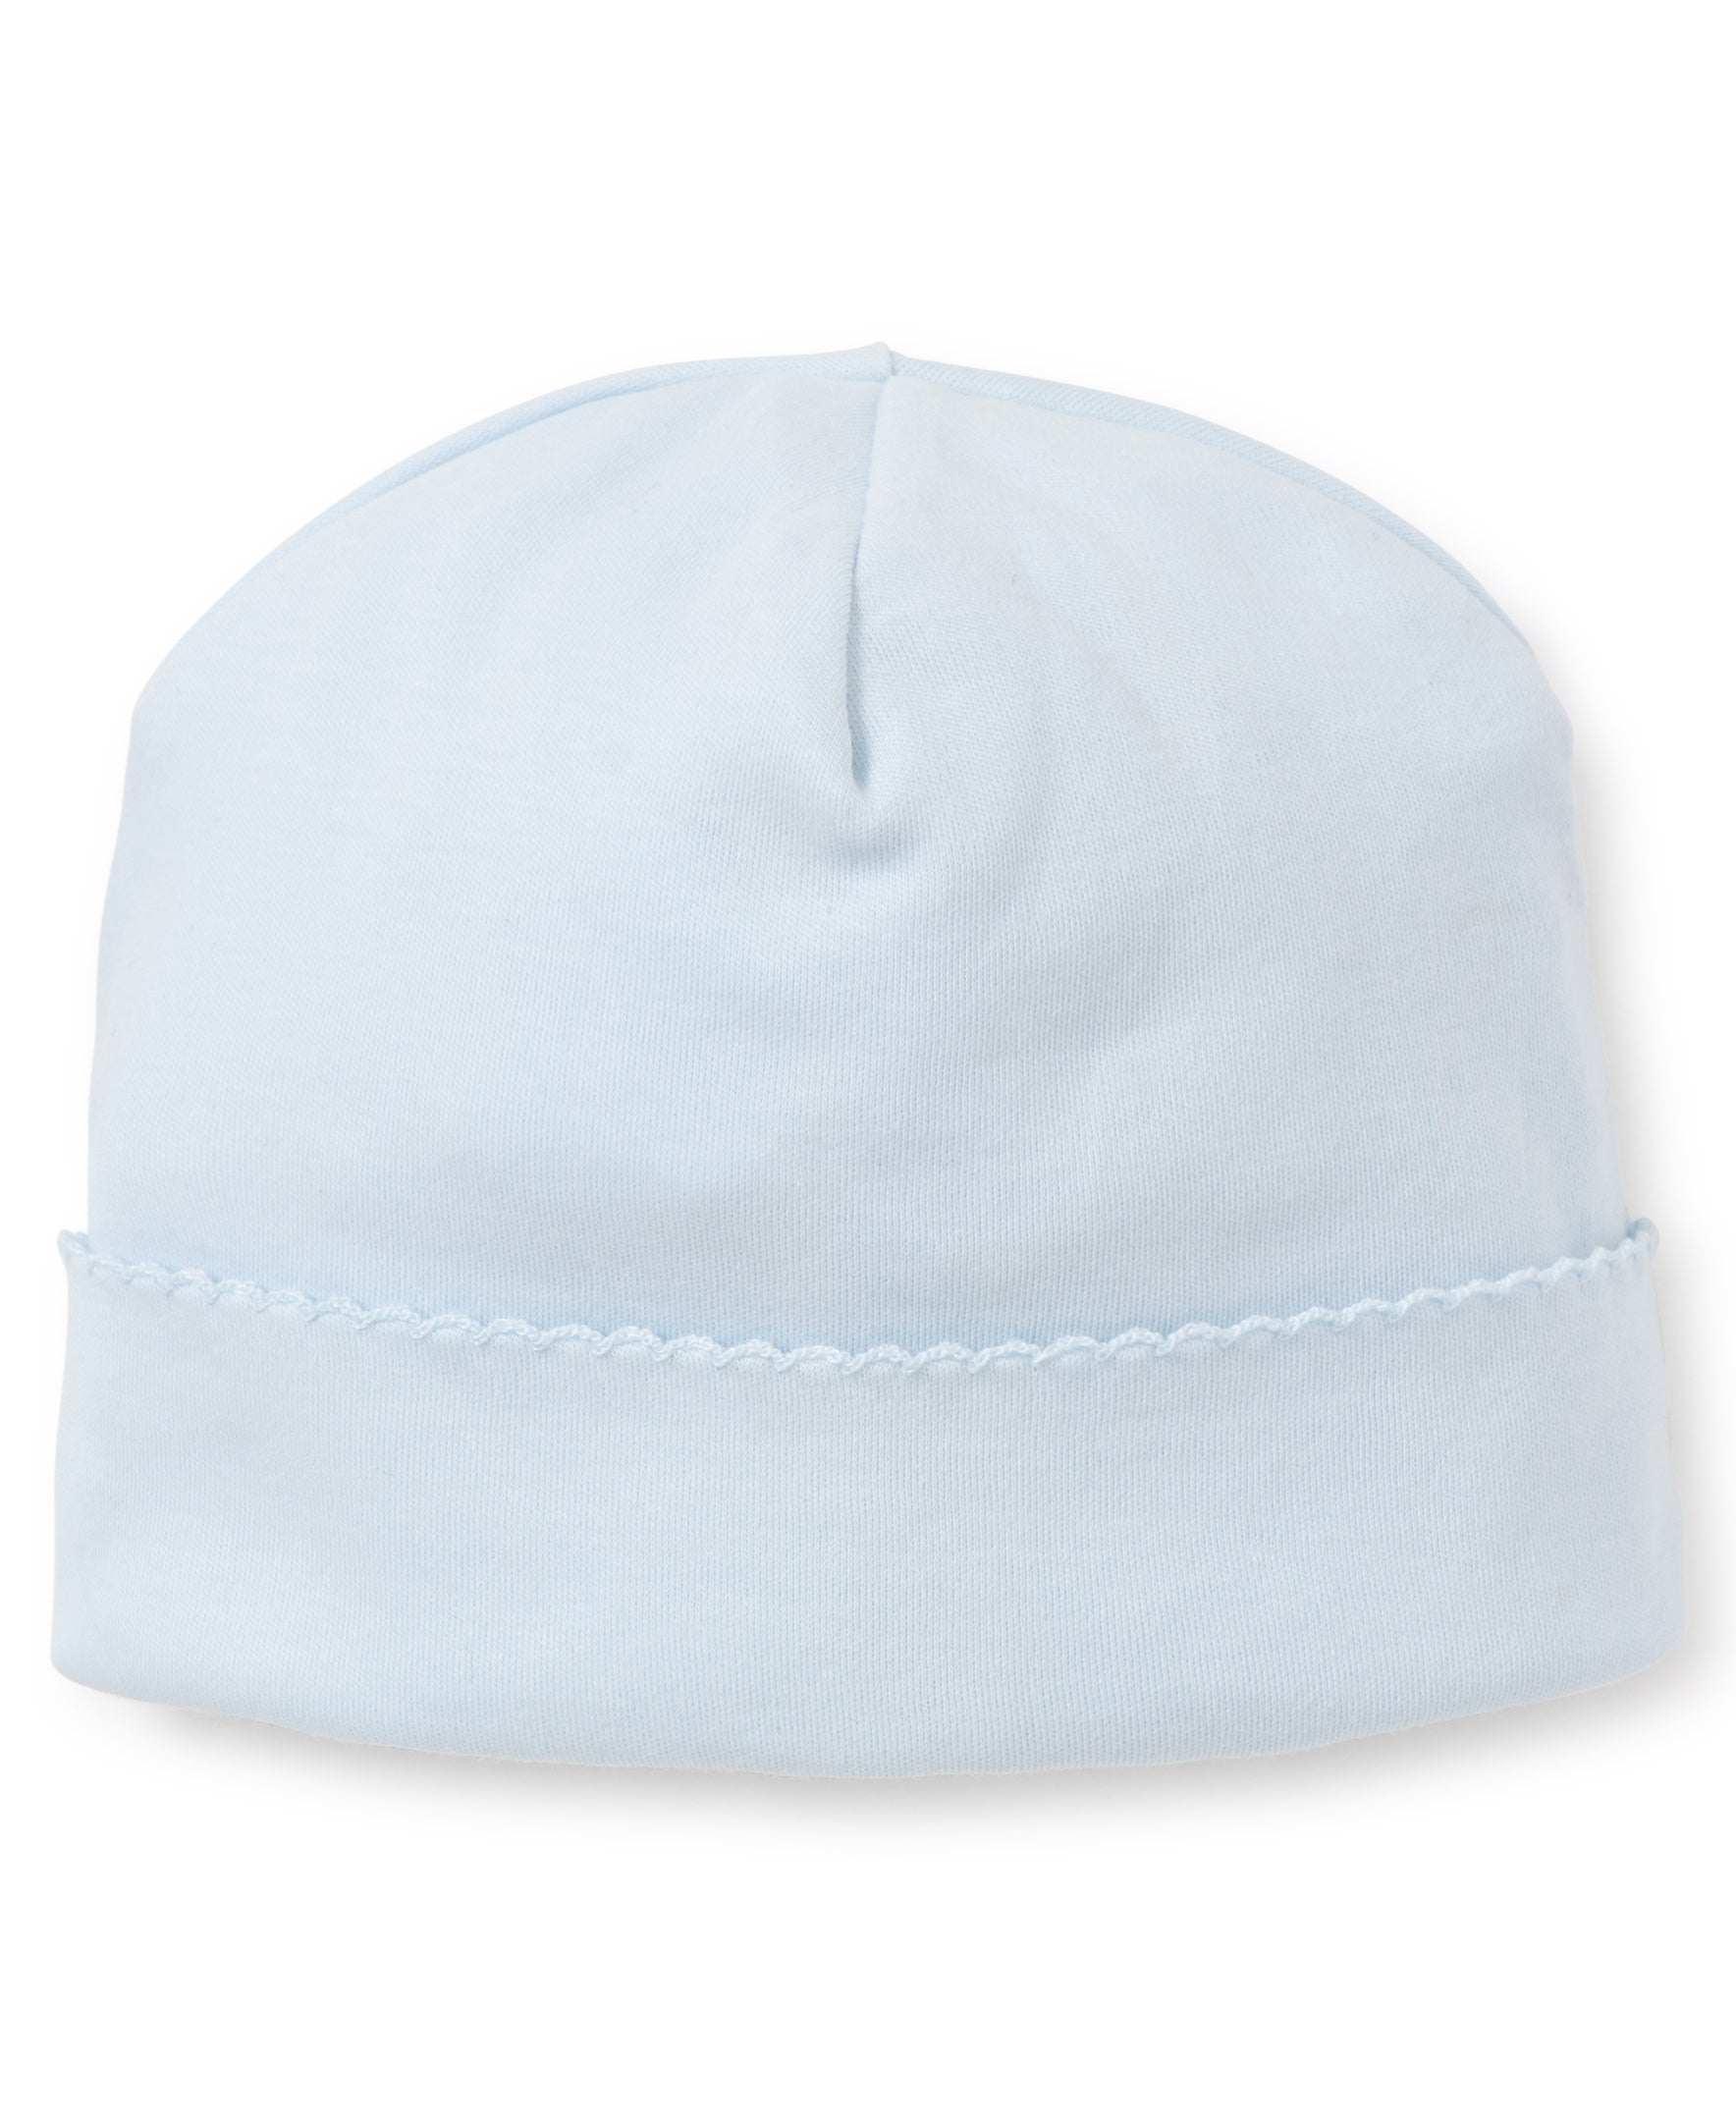 Basic Newborn Hat- Blue